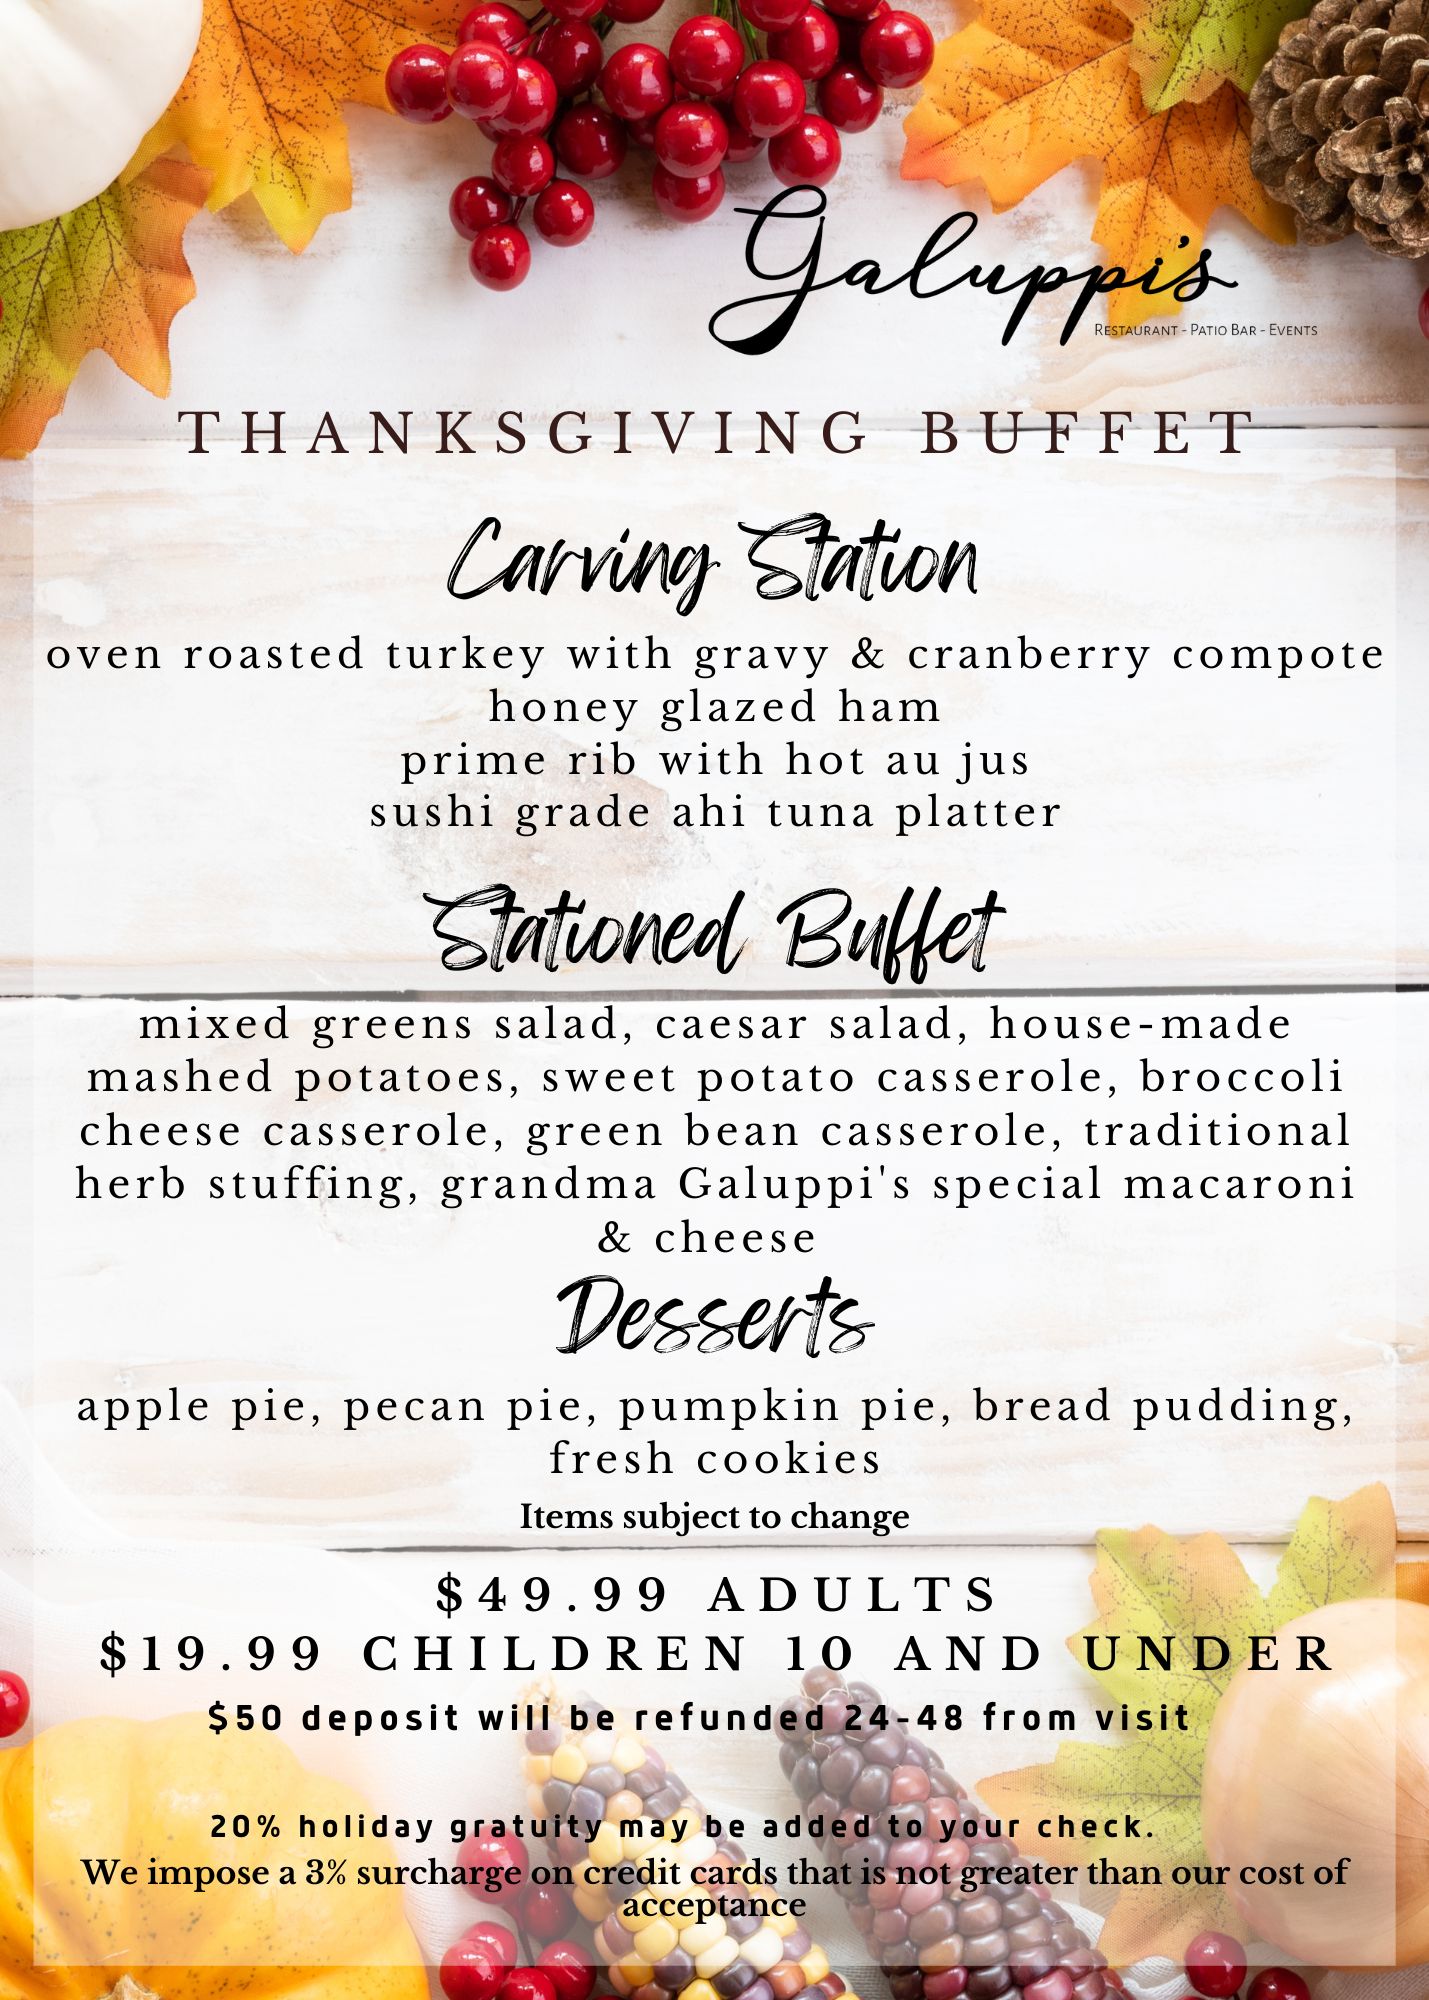 Thanksgiving Lunch/Dinner Buffet To-Go | Galuppis